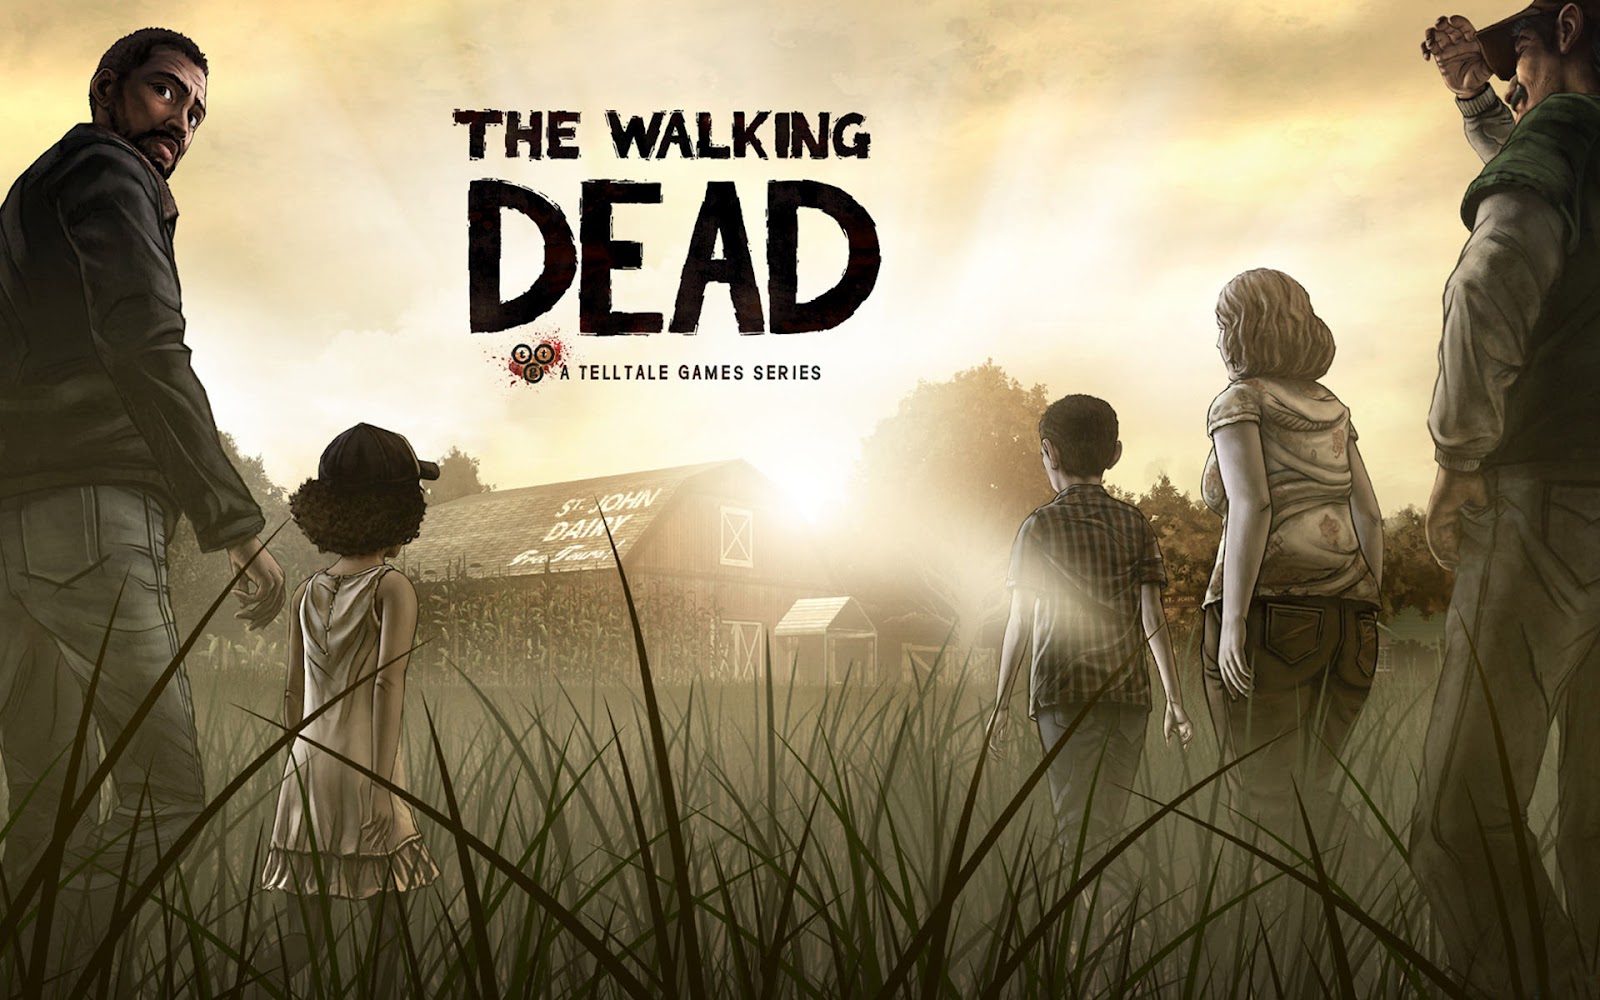 HD The Walking Dead Game Wallpaper Bureaublad